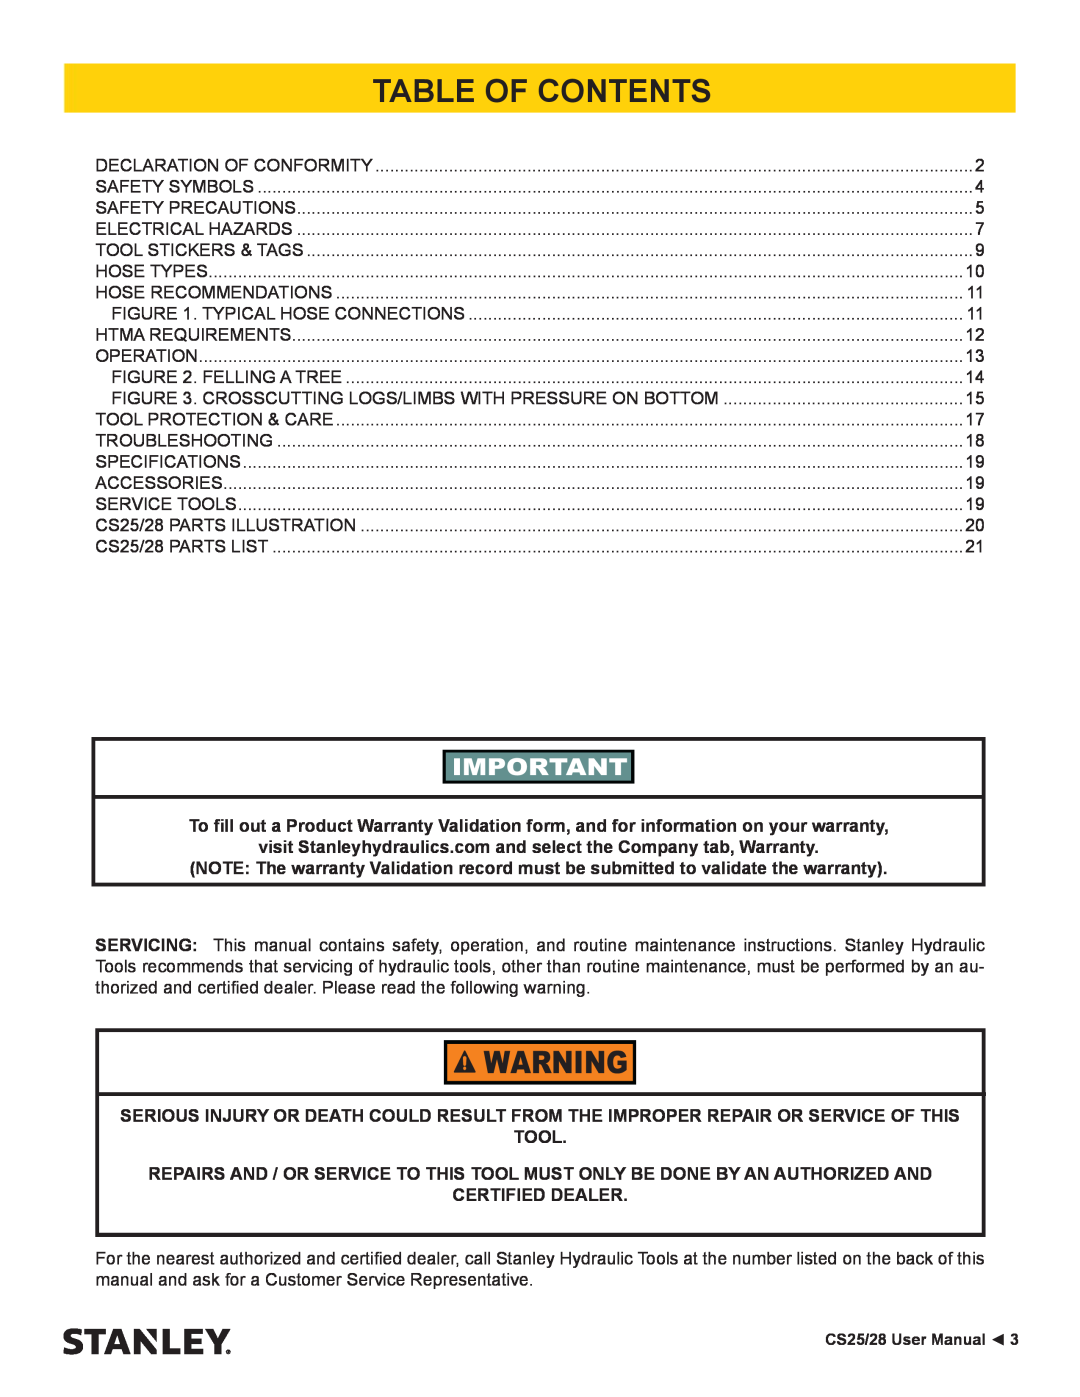 Stanley Black & Decker CS25/28 manual Table Of Contents, Tool, Certified Dealer 